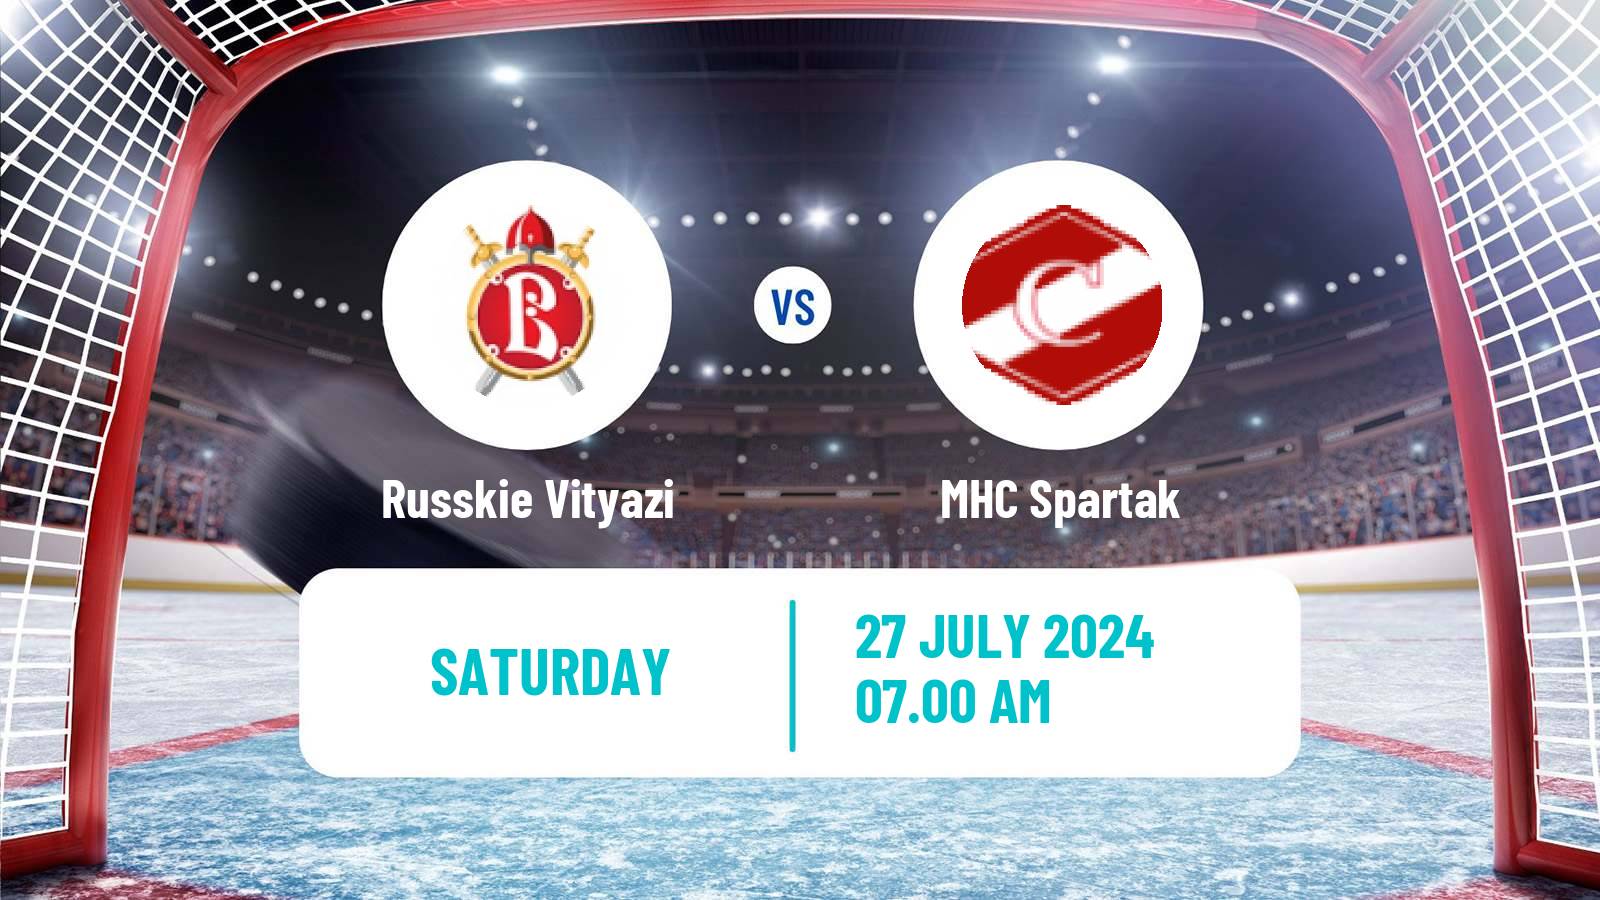 Hockey Club Friendly Ice Hockey Russkie Vityazi - MHC Spartak